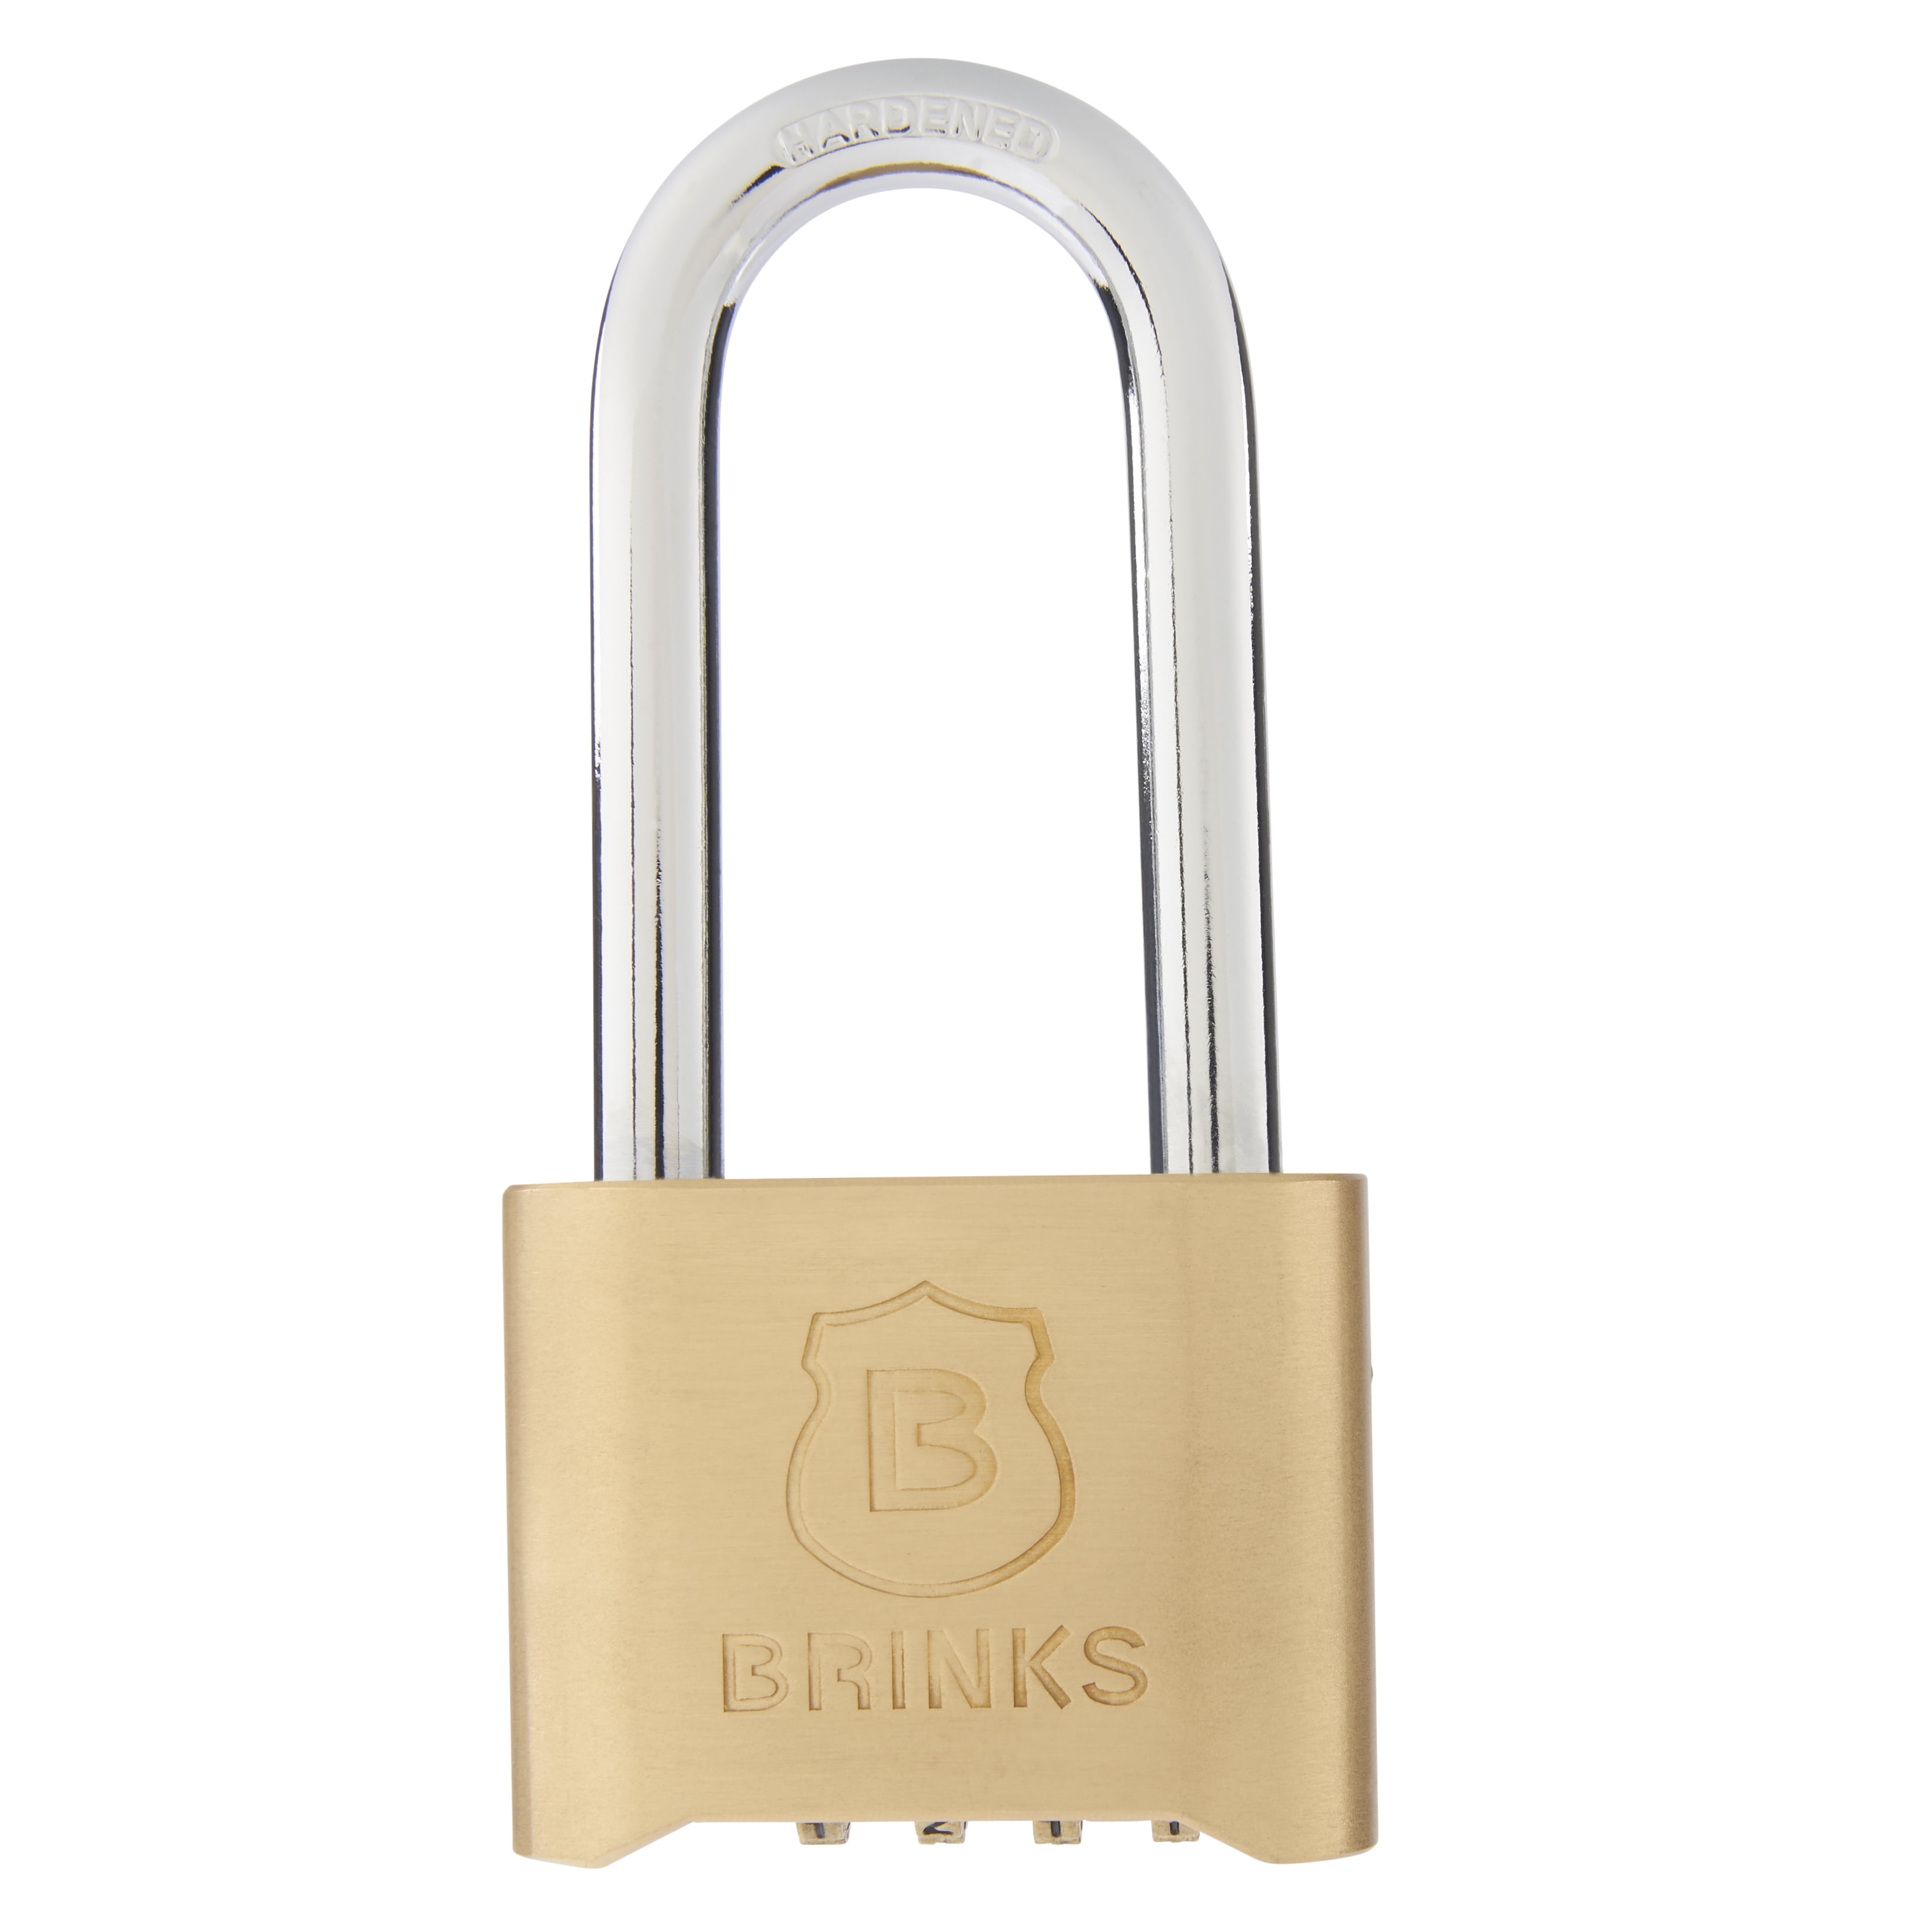 5 x BRASS Security Padlock QUALITY Travel Pad Lock 